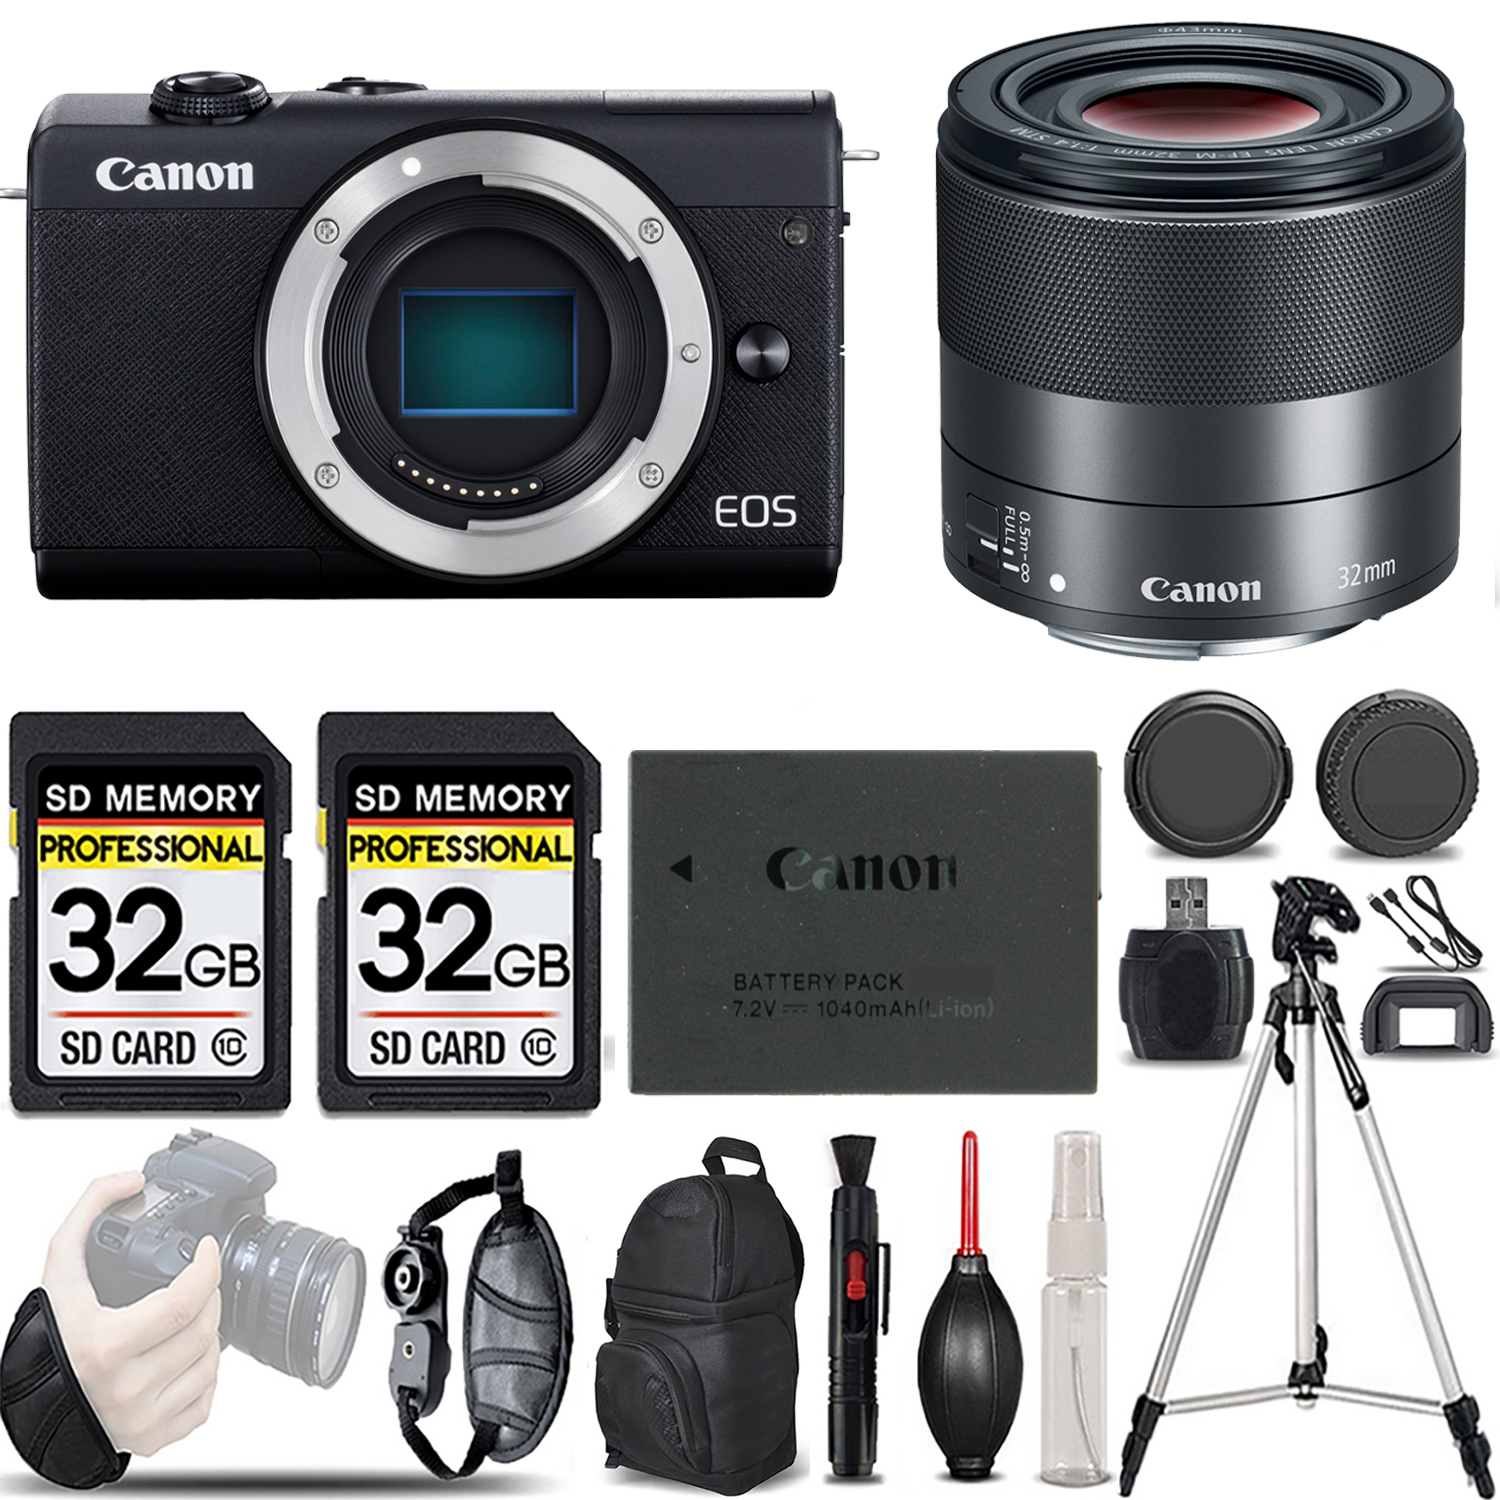 EOS M200  Camera (Black) + 32mm f/1.4 STM Lens - LOADED KIT *FREE SHIPPING*